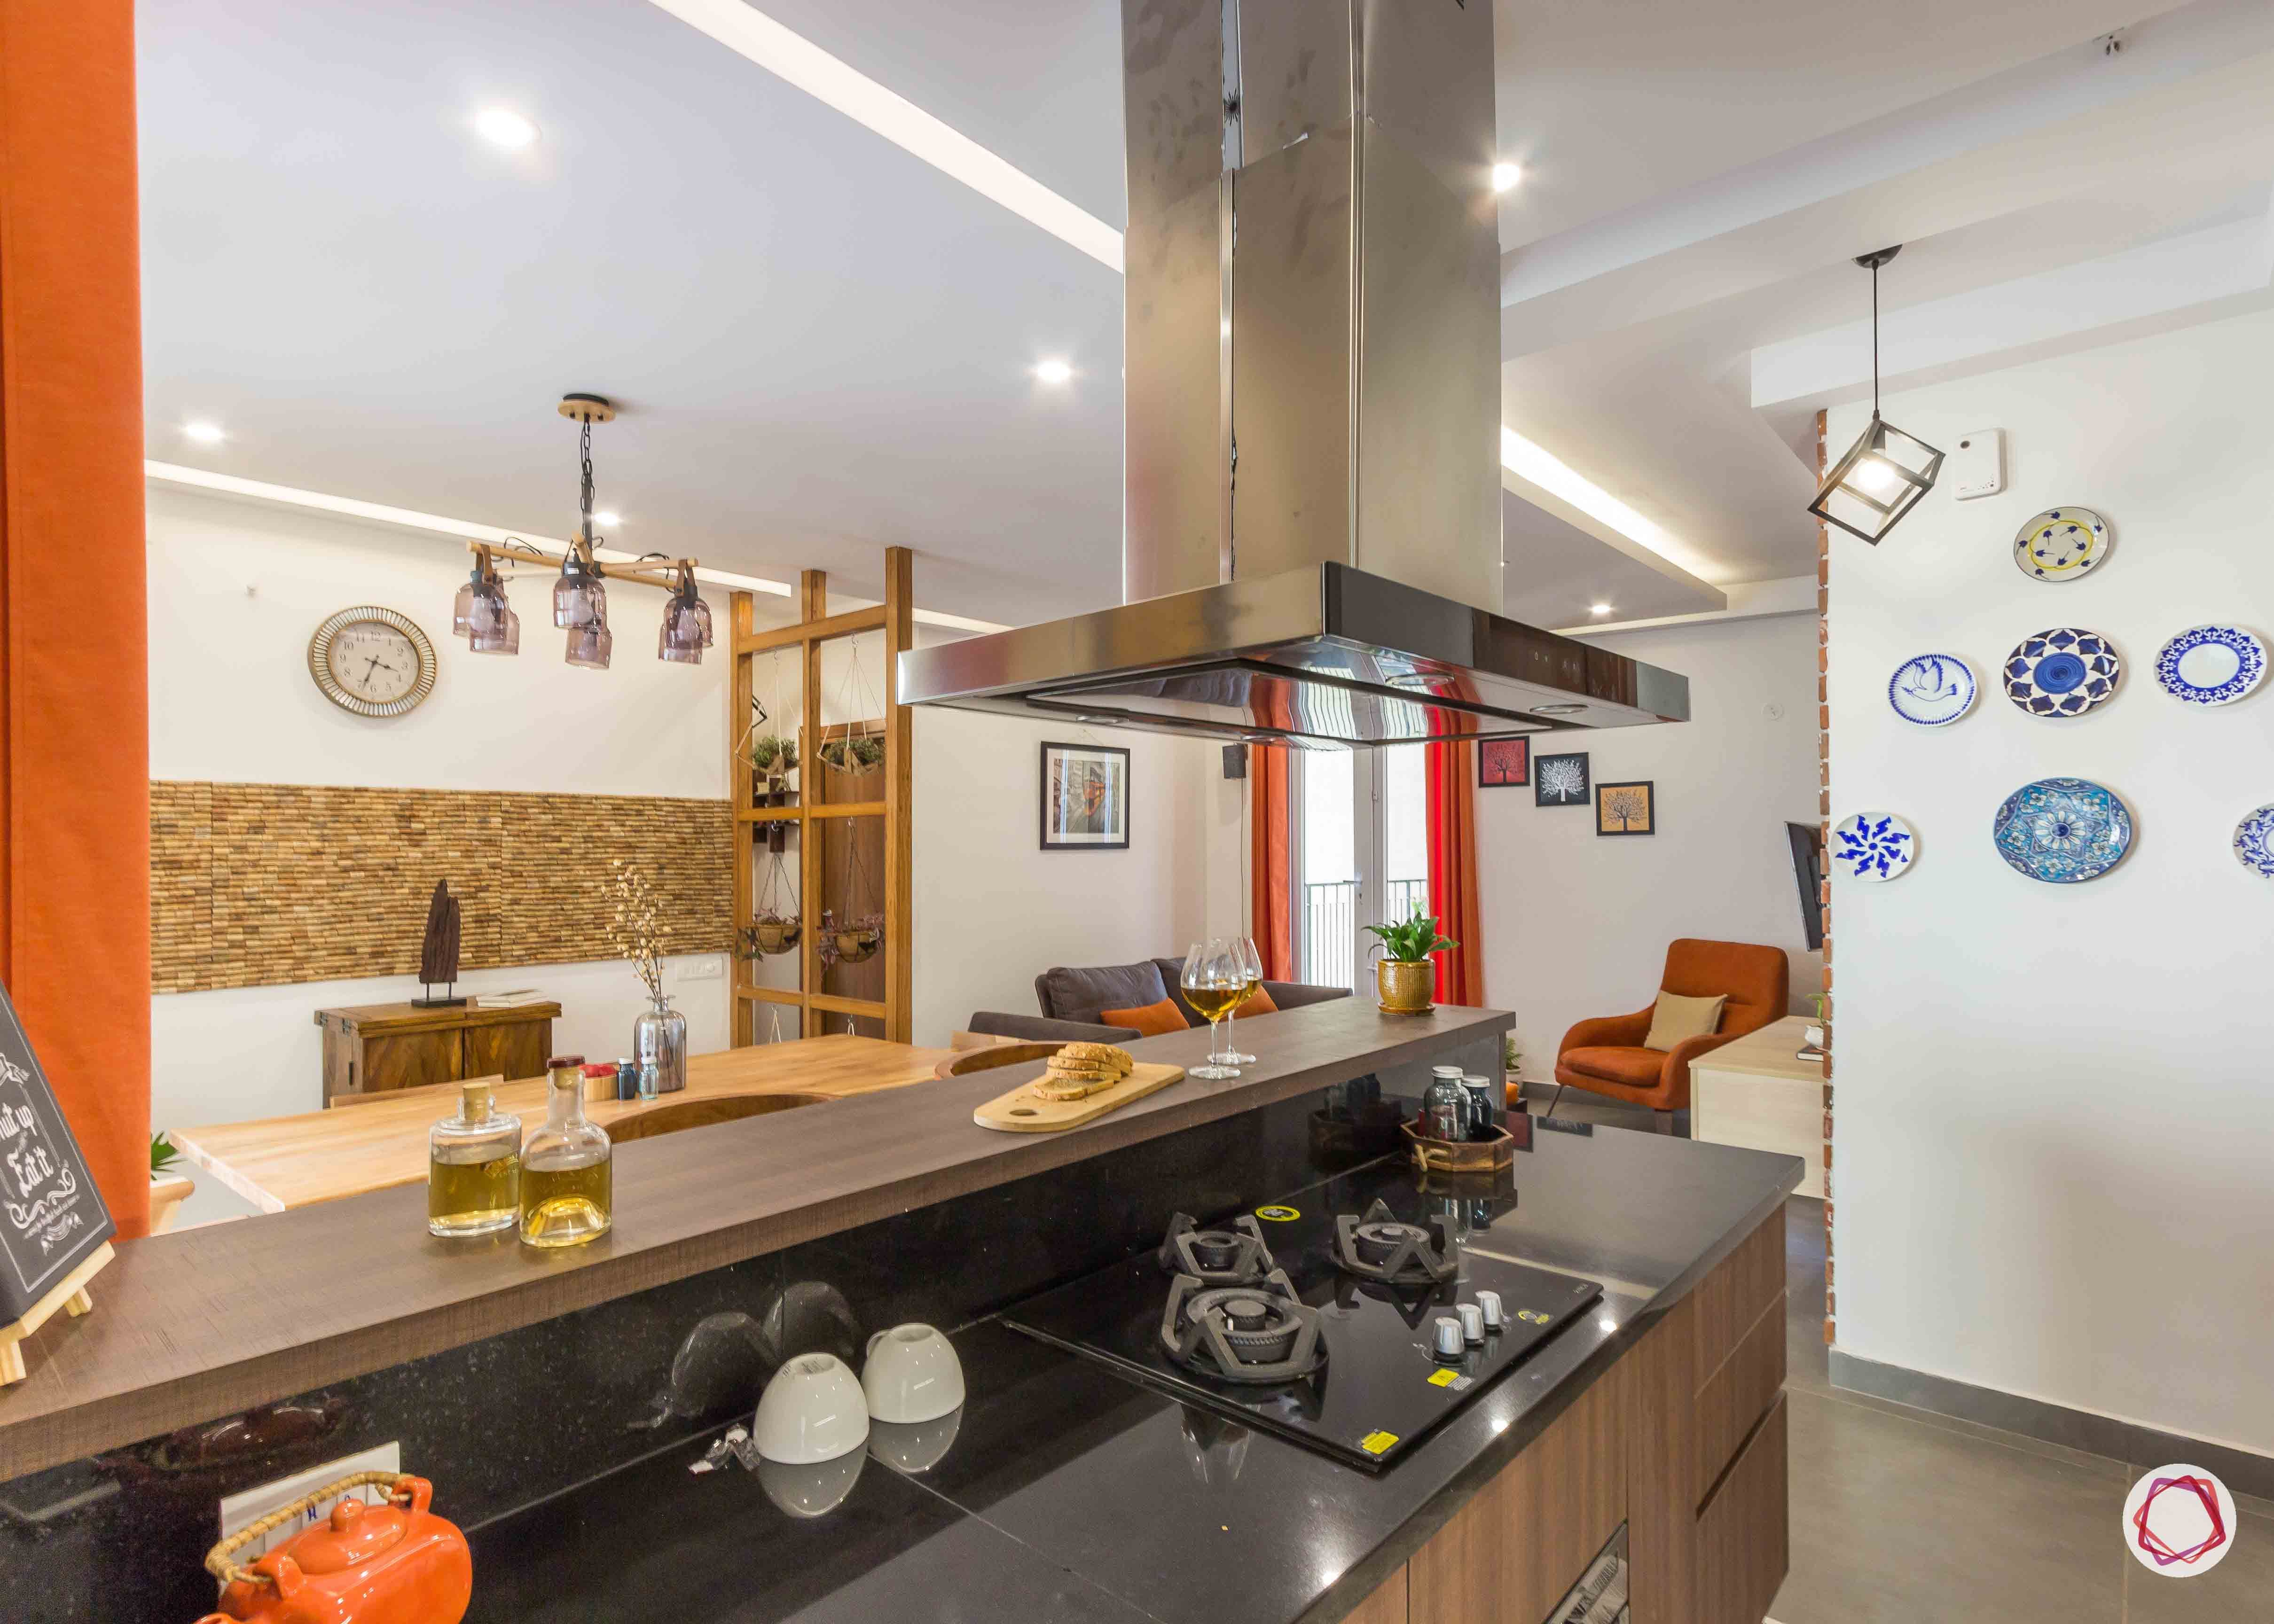 Best interior designers in bangalore_kitchen-chimney-countertop-breakfast-table